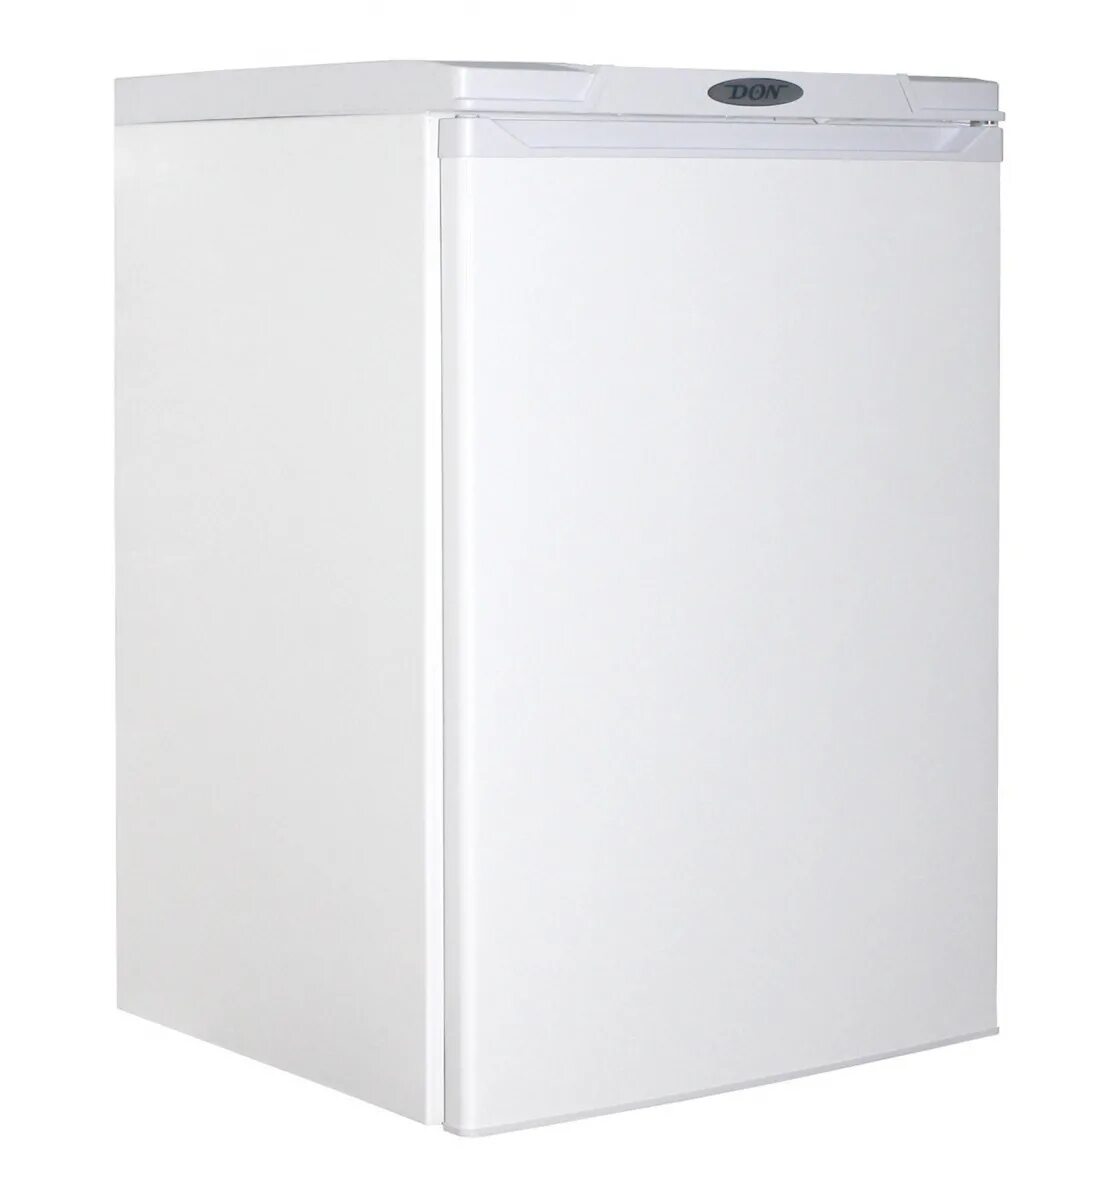 Холодильник don r-405 g. Холодильник don r-405 b. Холодильник Дон r407. Холодильник don r-405 001 g.